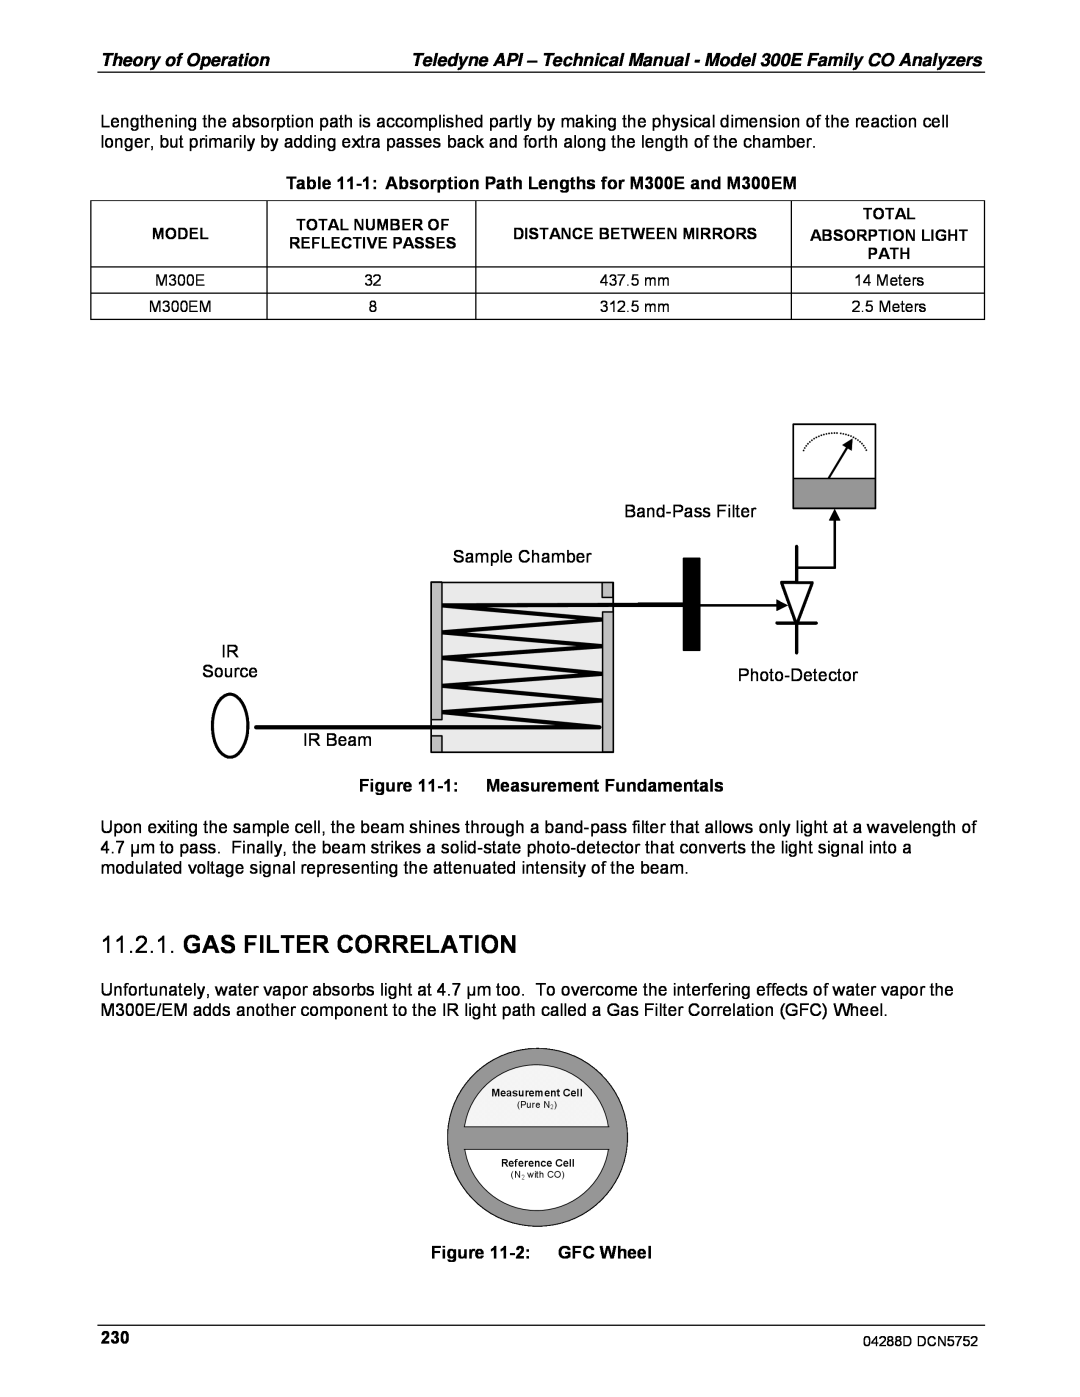 Teledyne M300EM operation manual Gas Filter Correlation, 1:Measurement Fundamentals, 2:GFC Wheel 